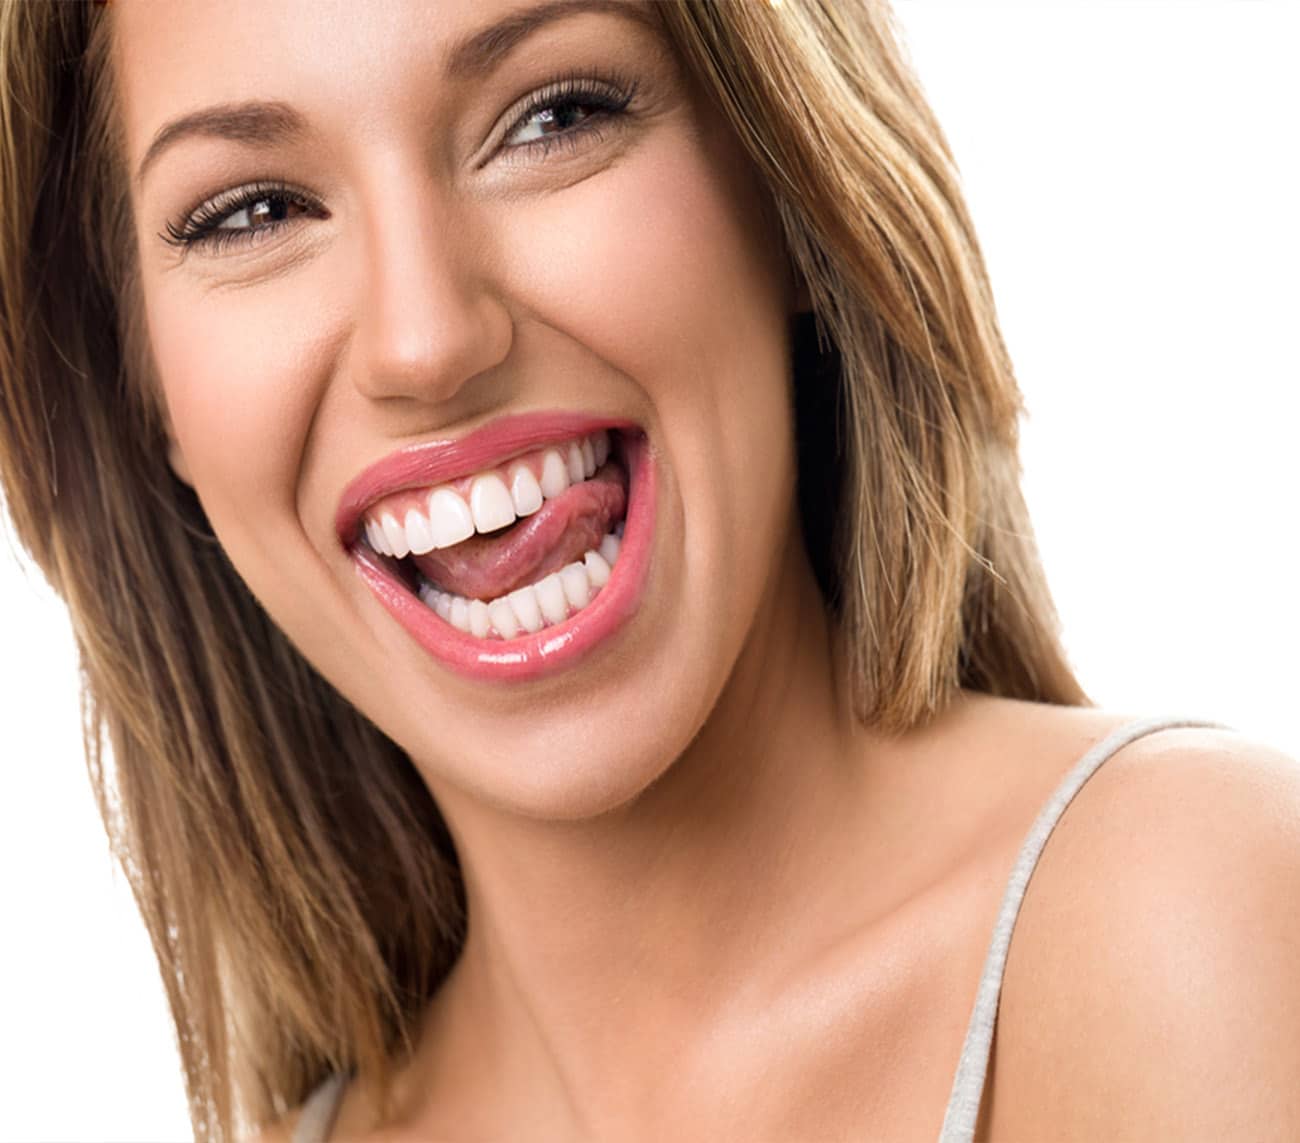 Dentus perfectus - stomatološki pregled - novi pacijenti